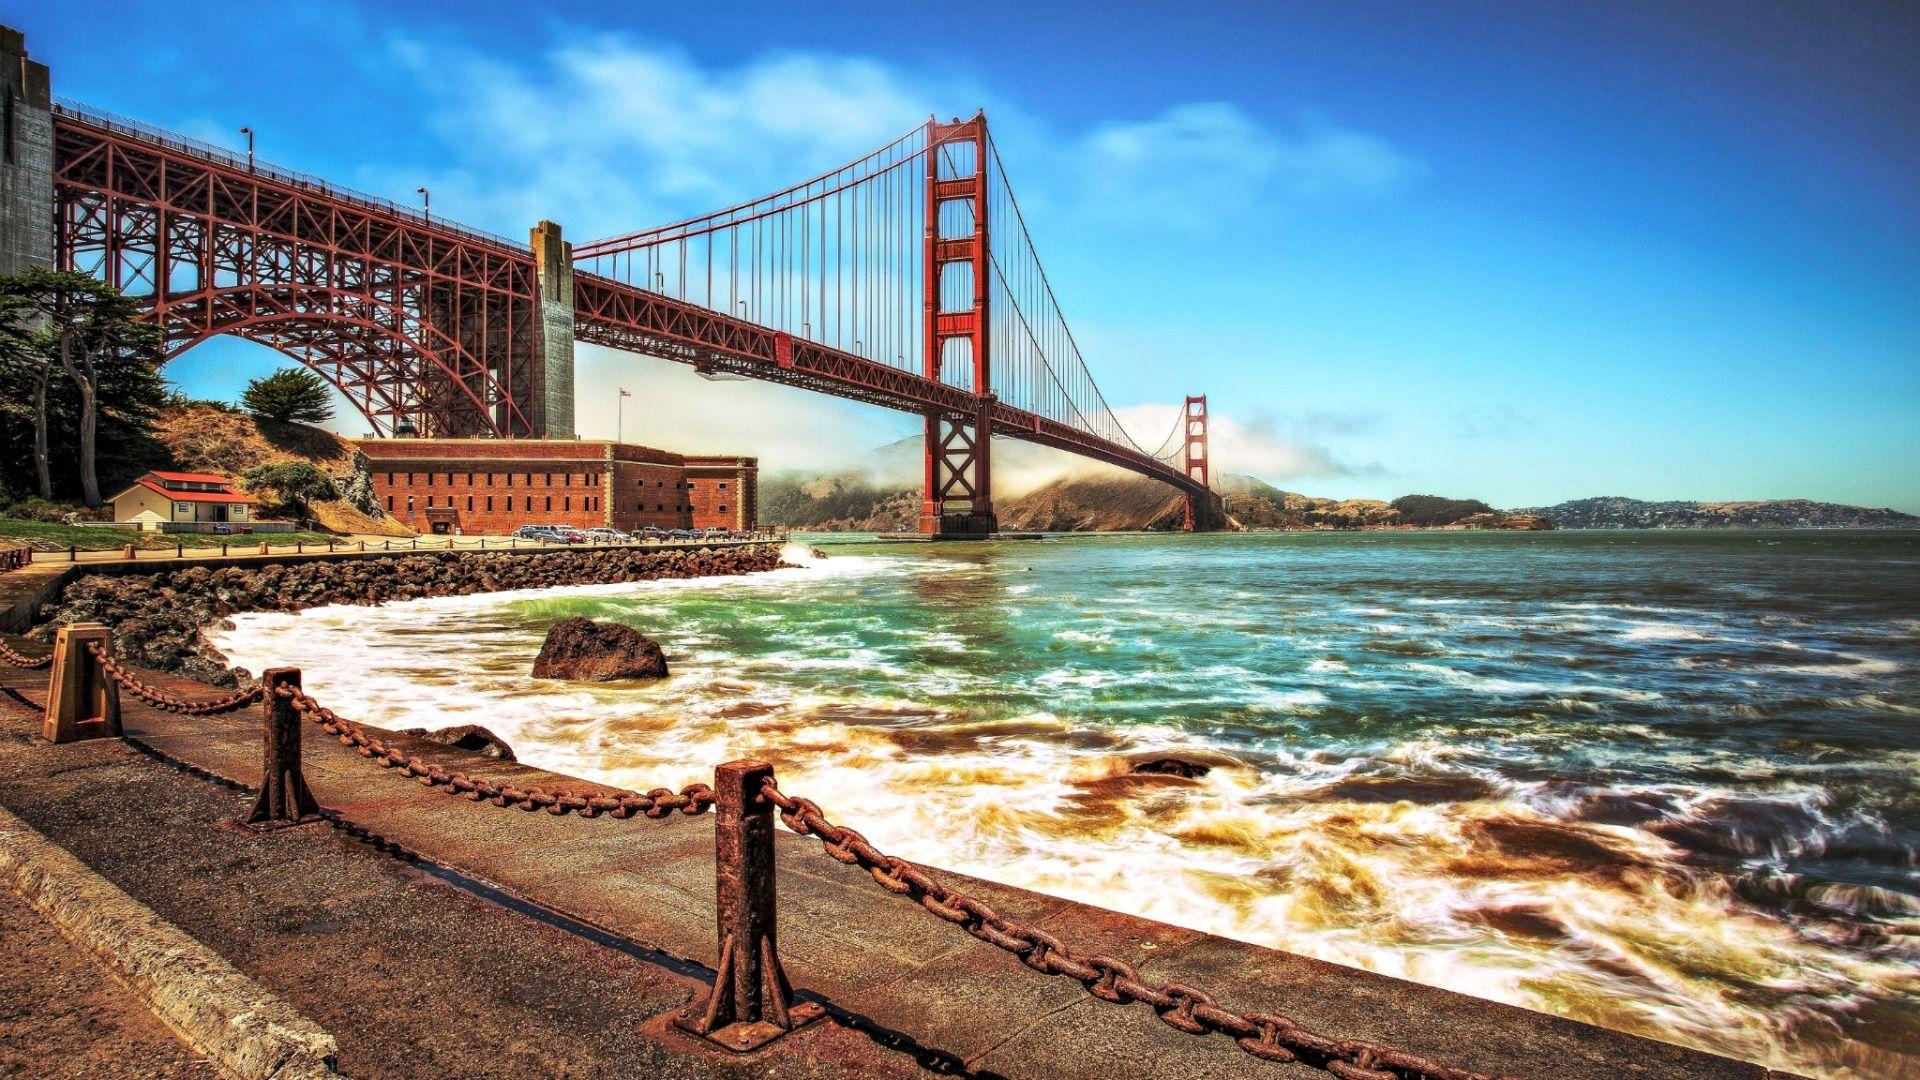 Golden Gate Bridge Wallpaper High Quality. Download Free. Best